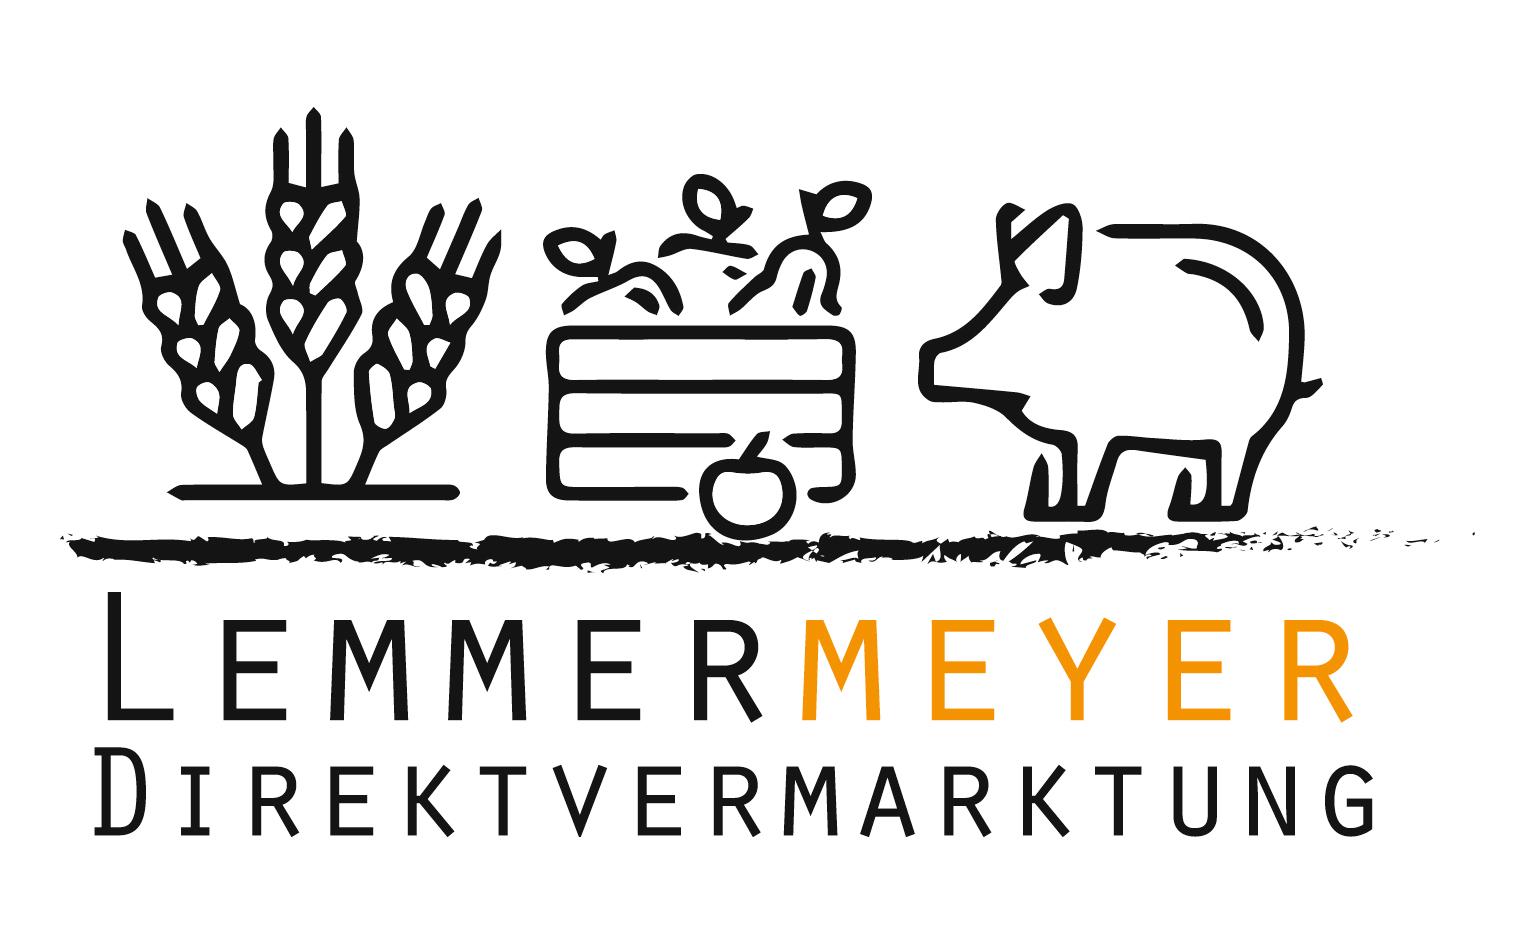 Direktvermarktung Lemmermeyer